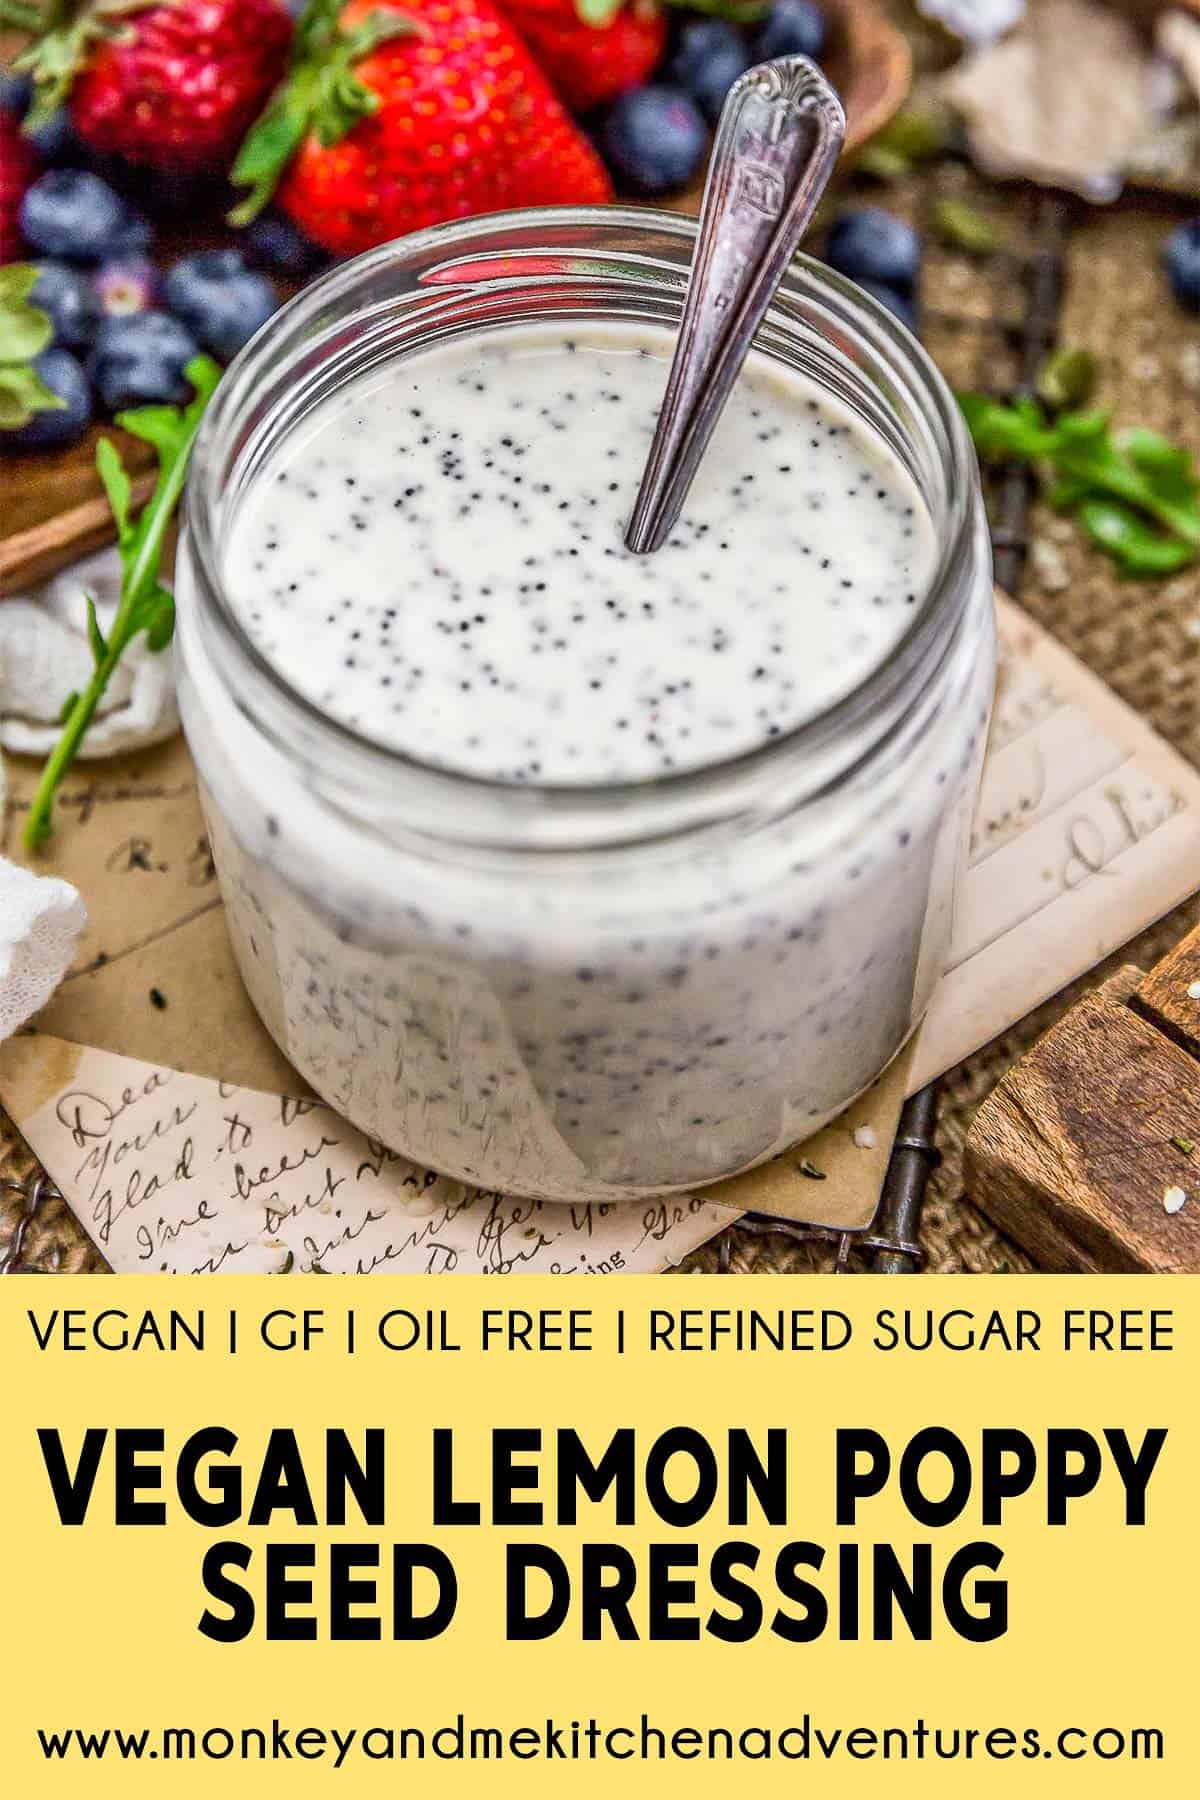 Vegan Lemon Poppy Seed Dressing with text description